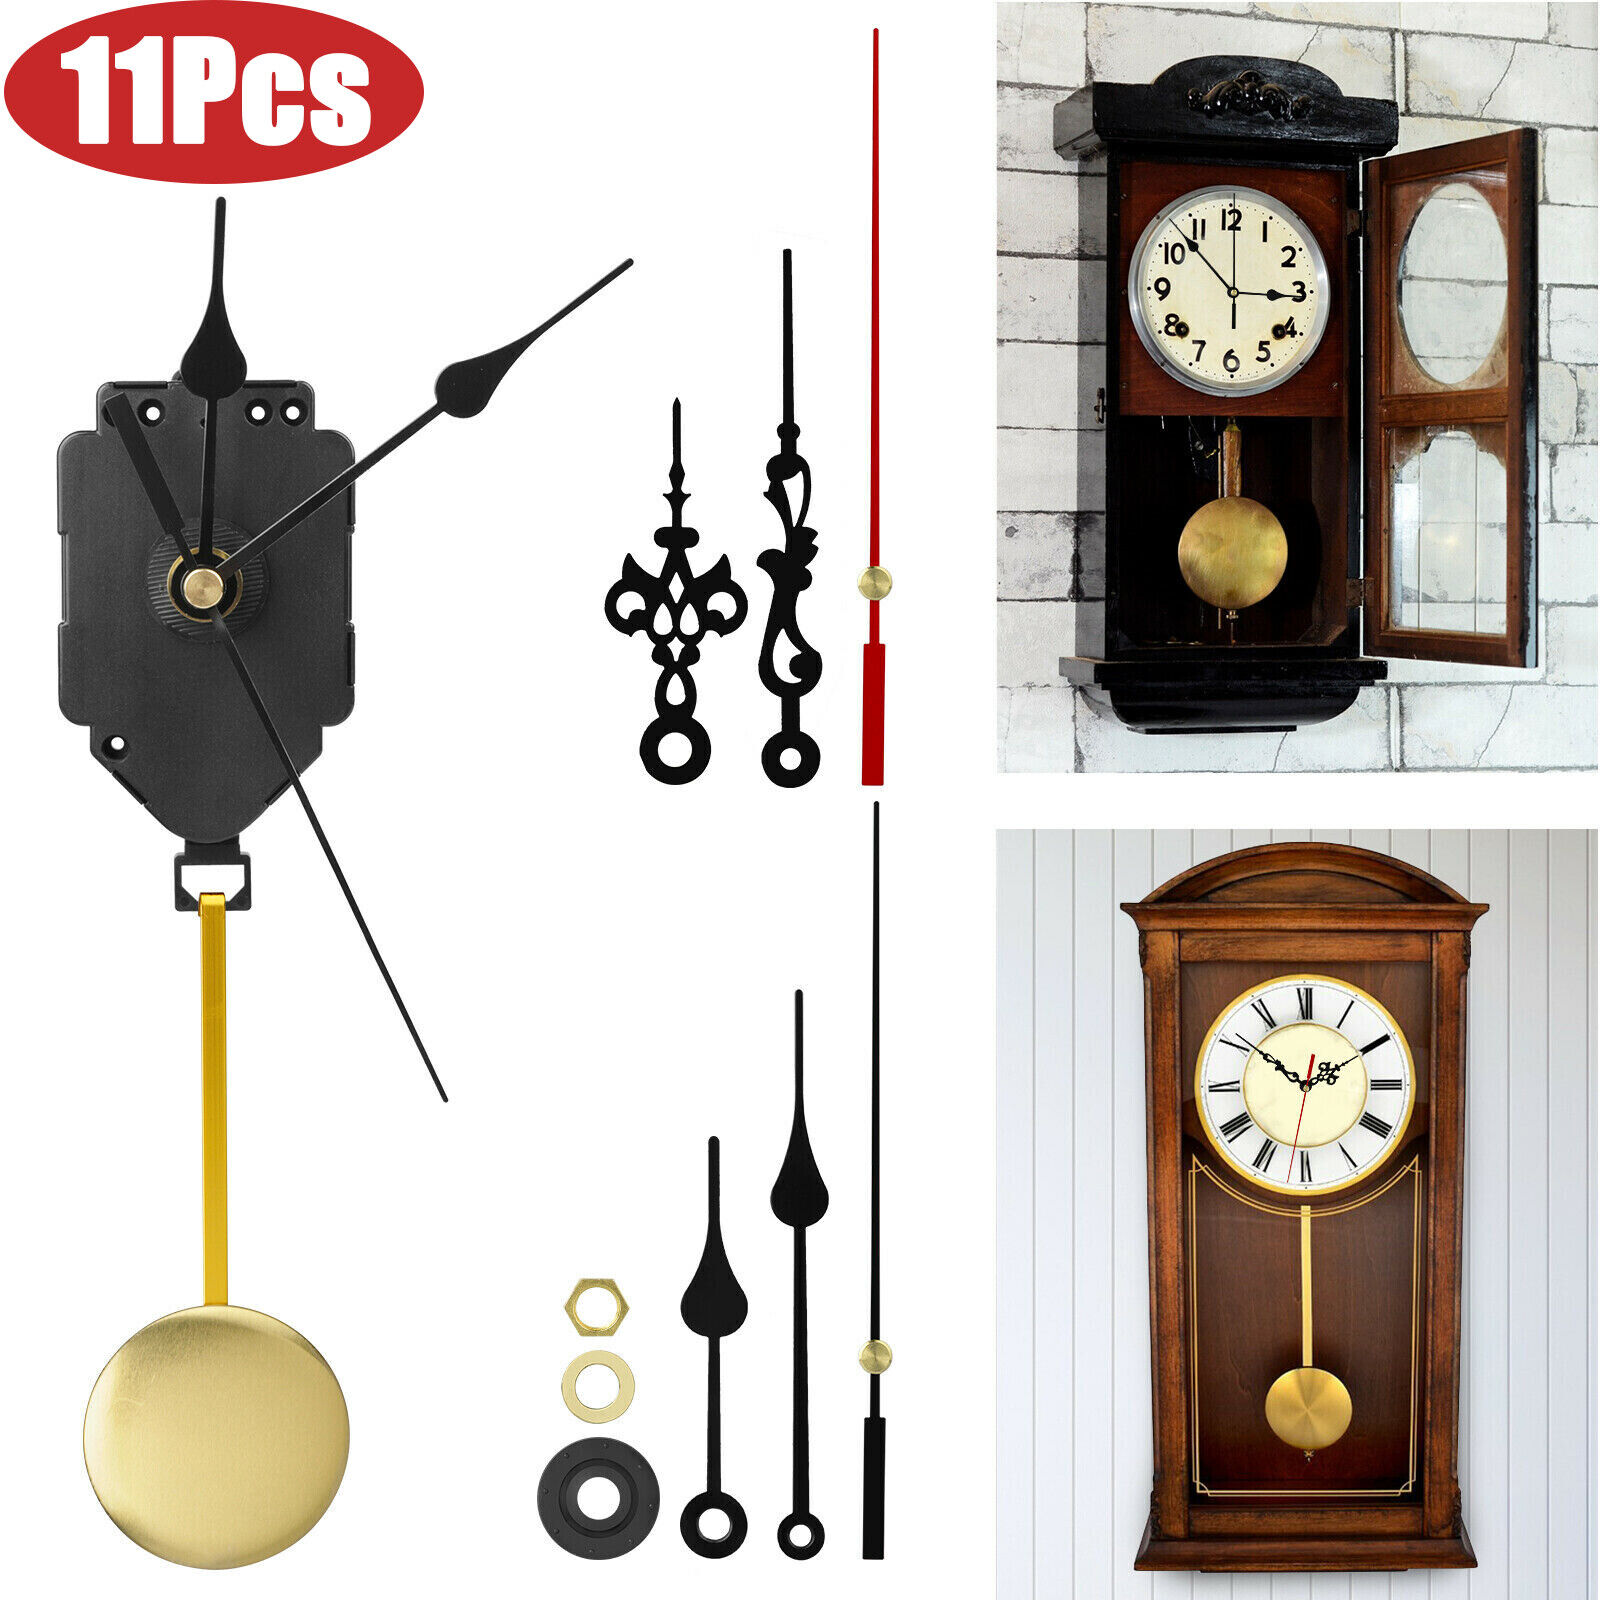 DIY Quartz Wall Clock Pendulum Swing Movement Mechanism Kit Chime Repair Parts 